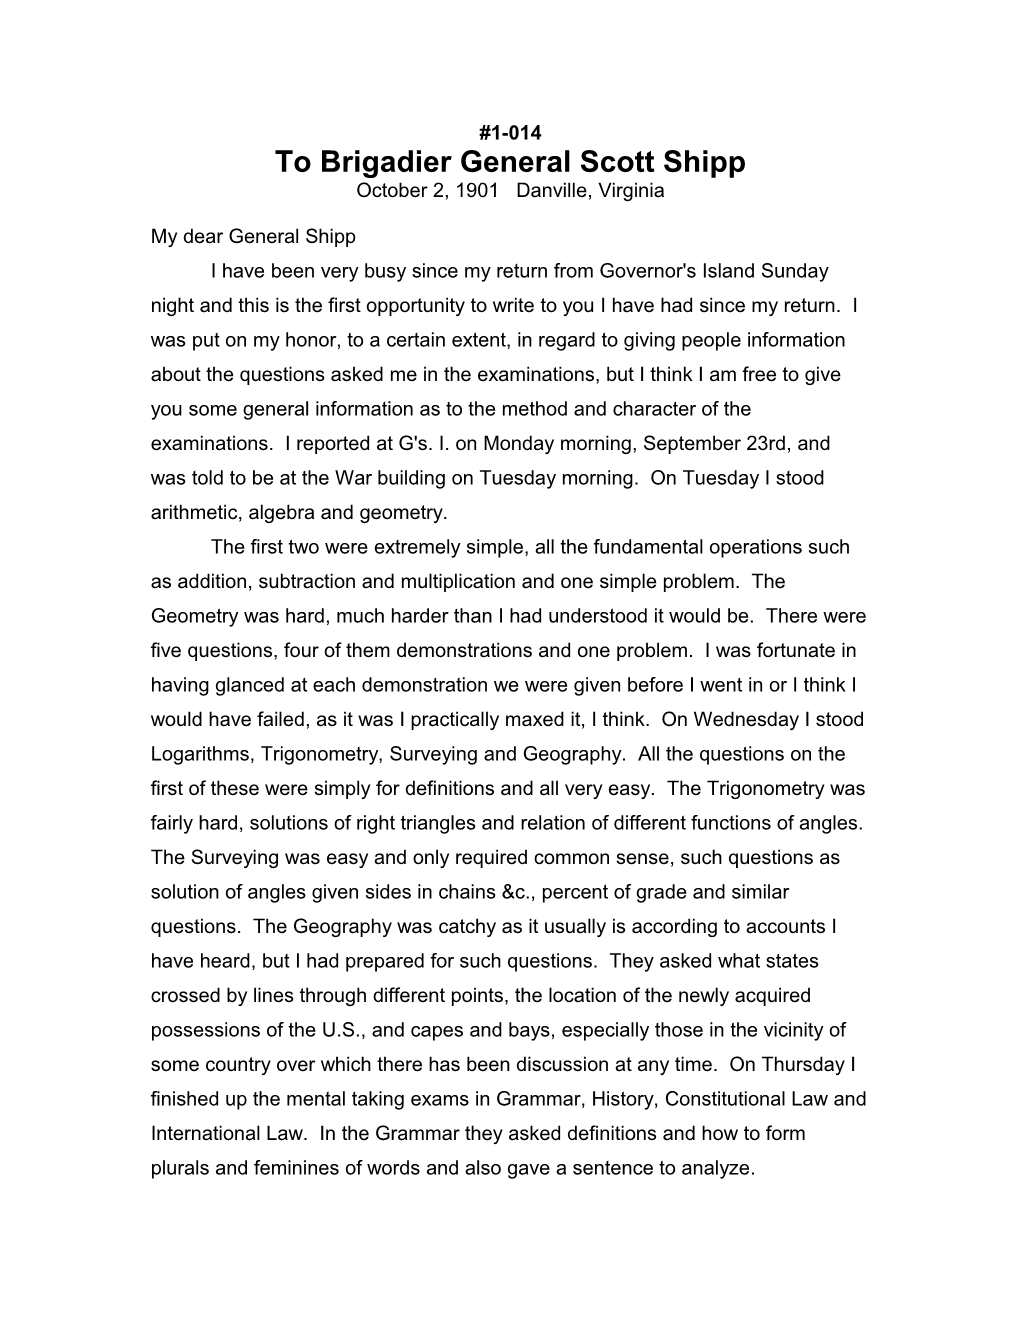 To Brigadier General Scott Shipp